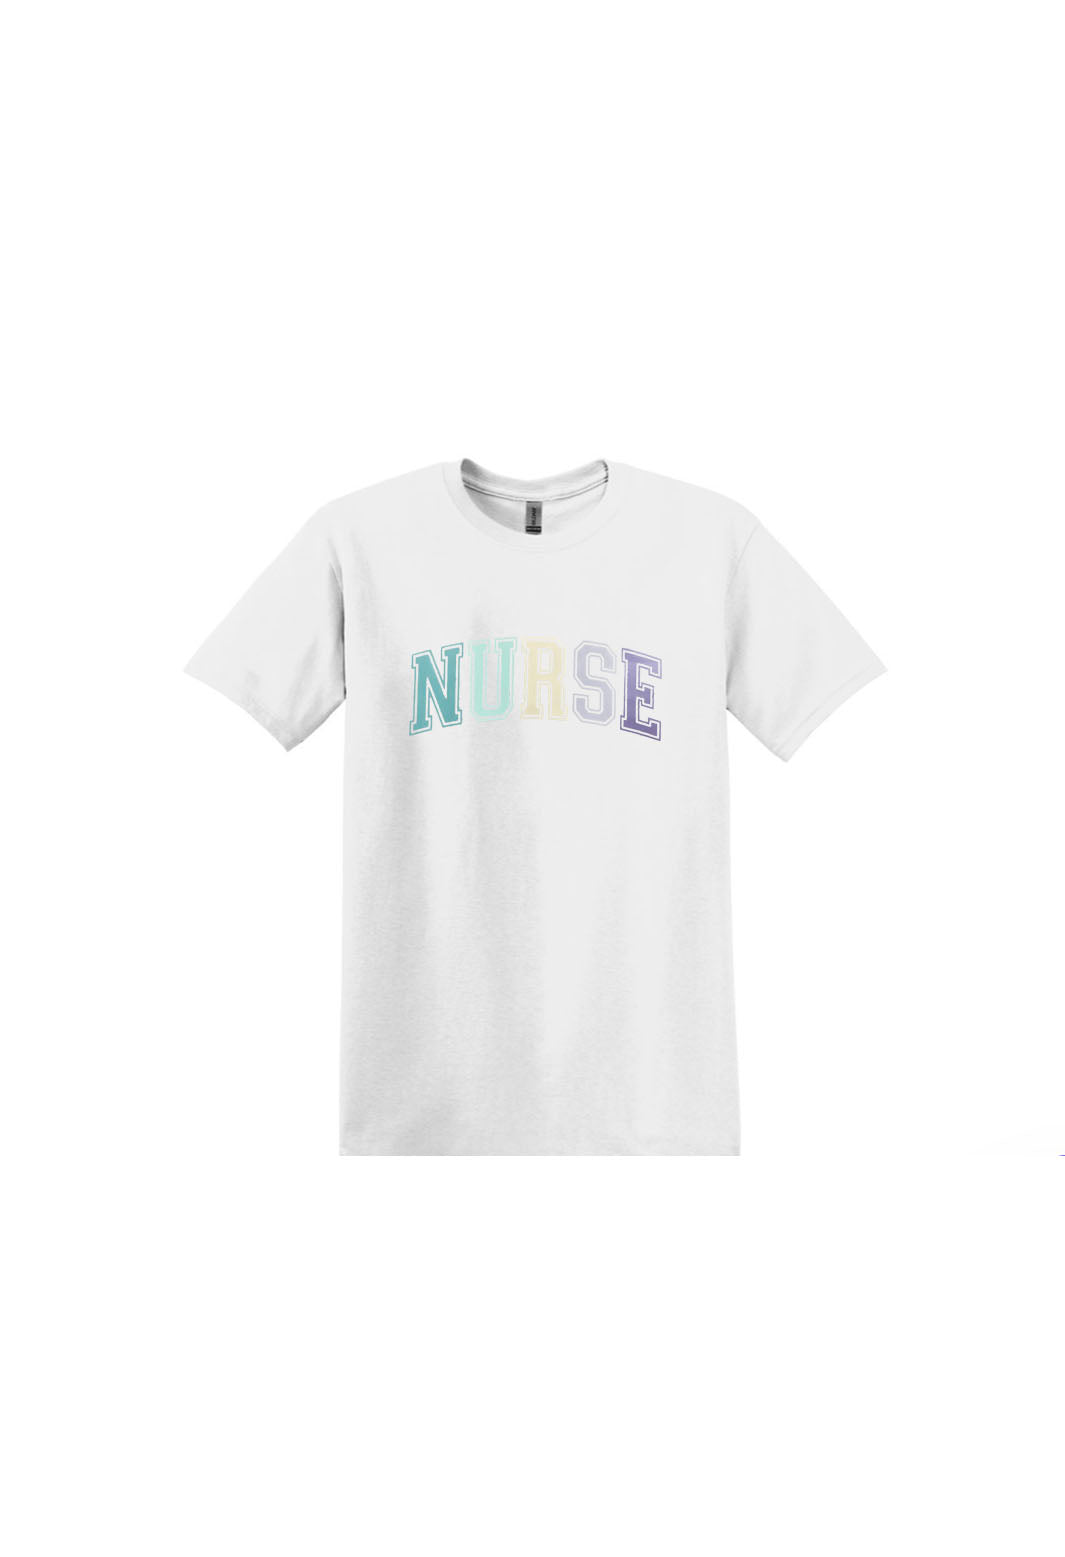 Nurse-Unisex Shirt or Crew